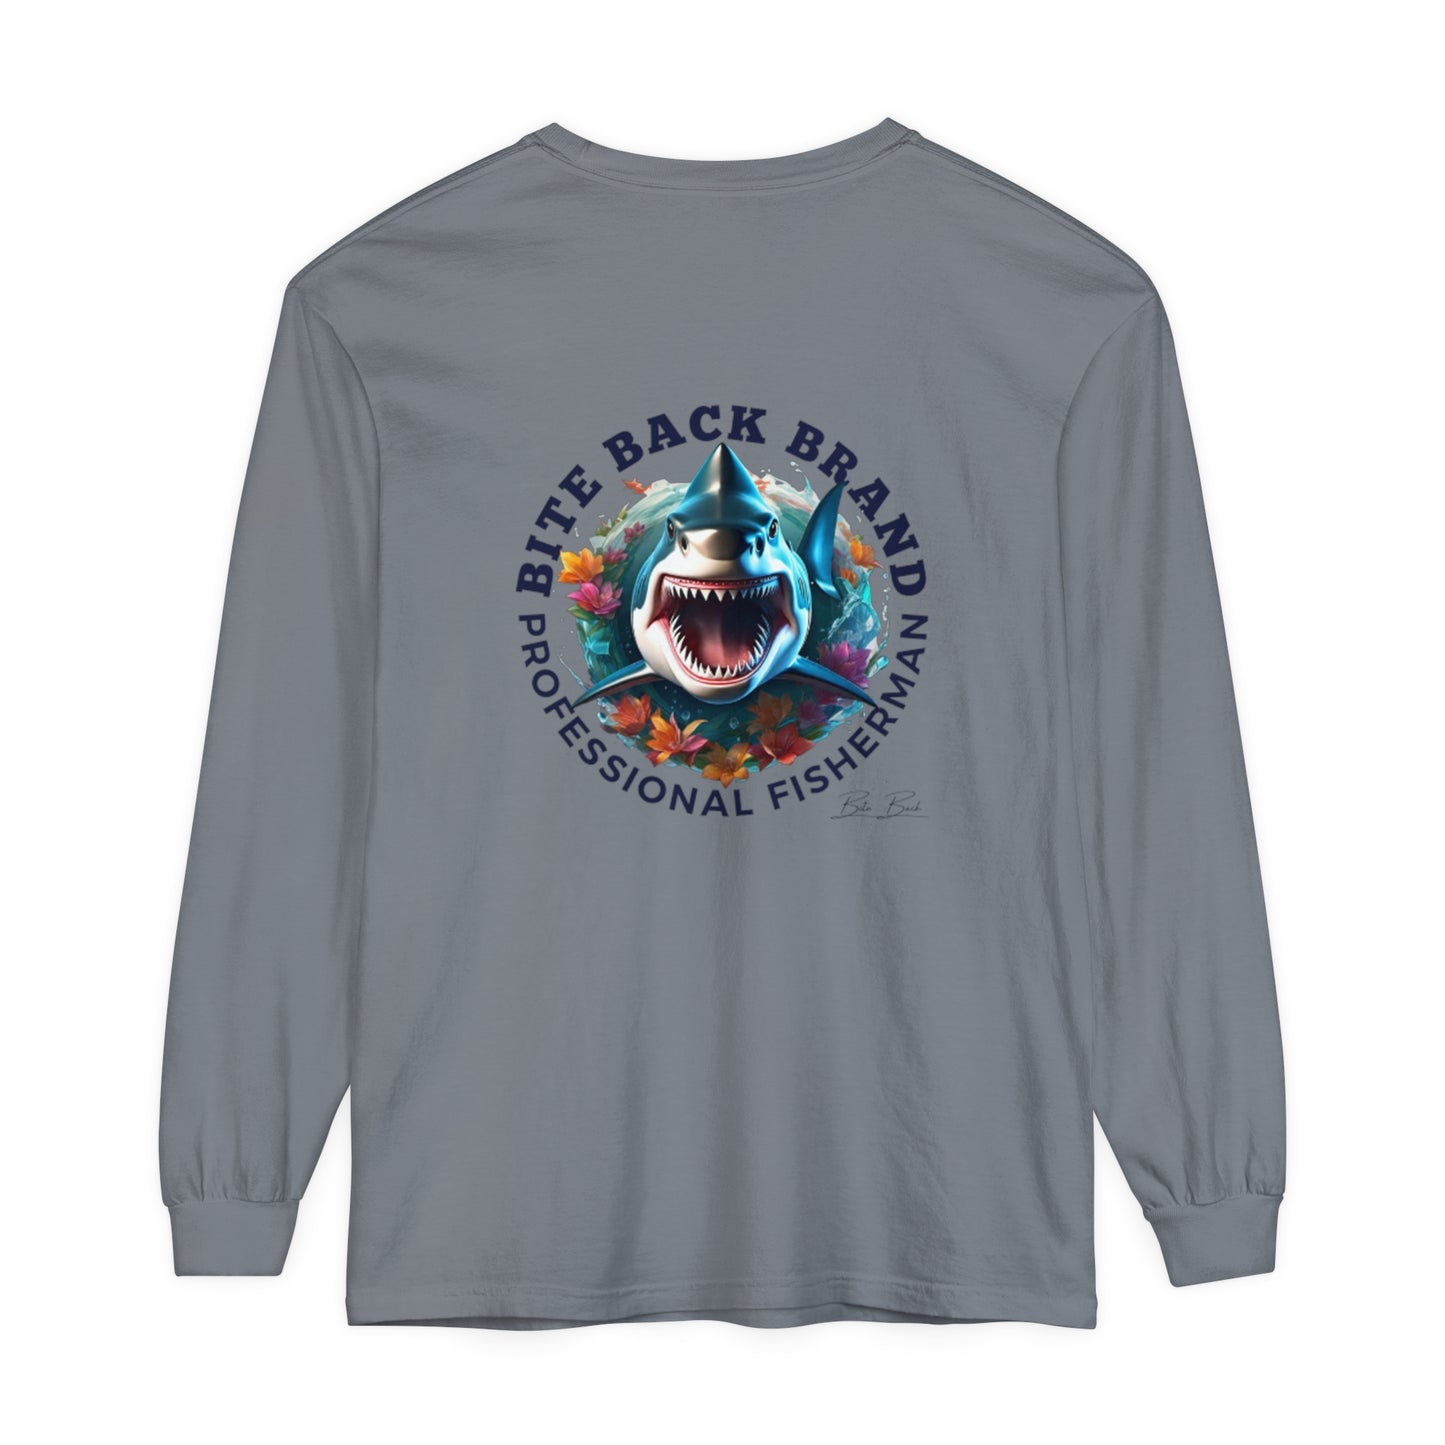 Professional Fisherman Unisex Garment-dyed Long Sleeve T-Shirt